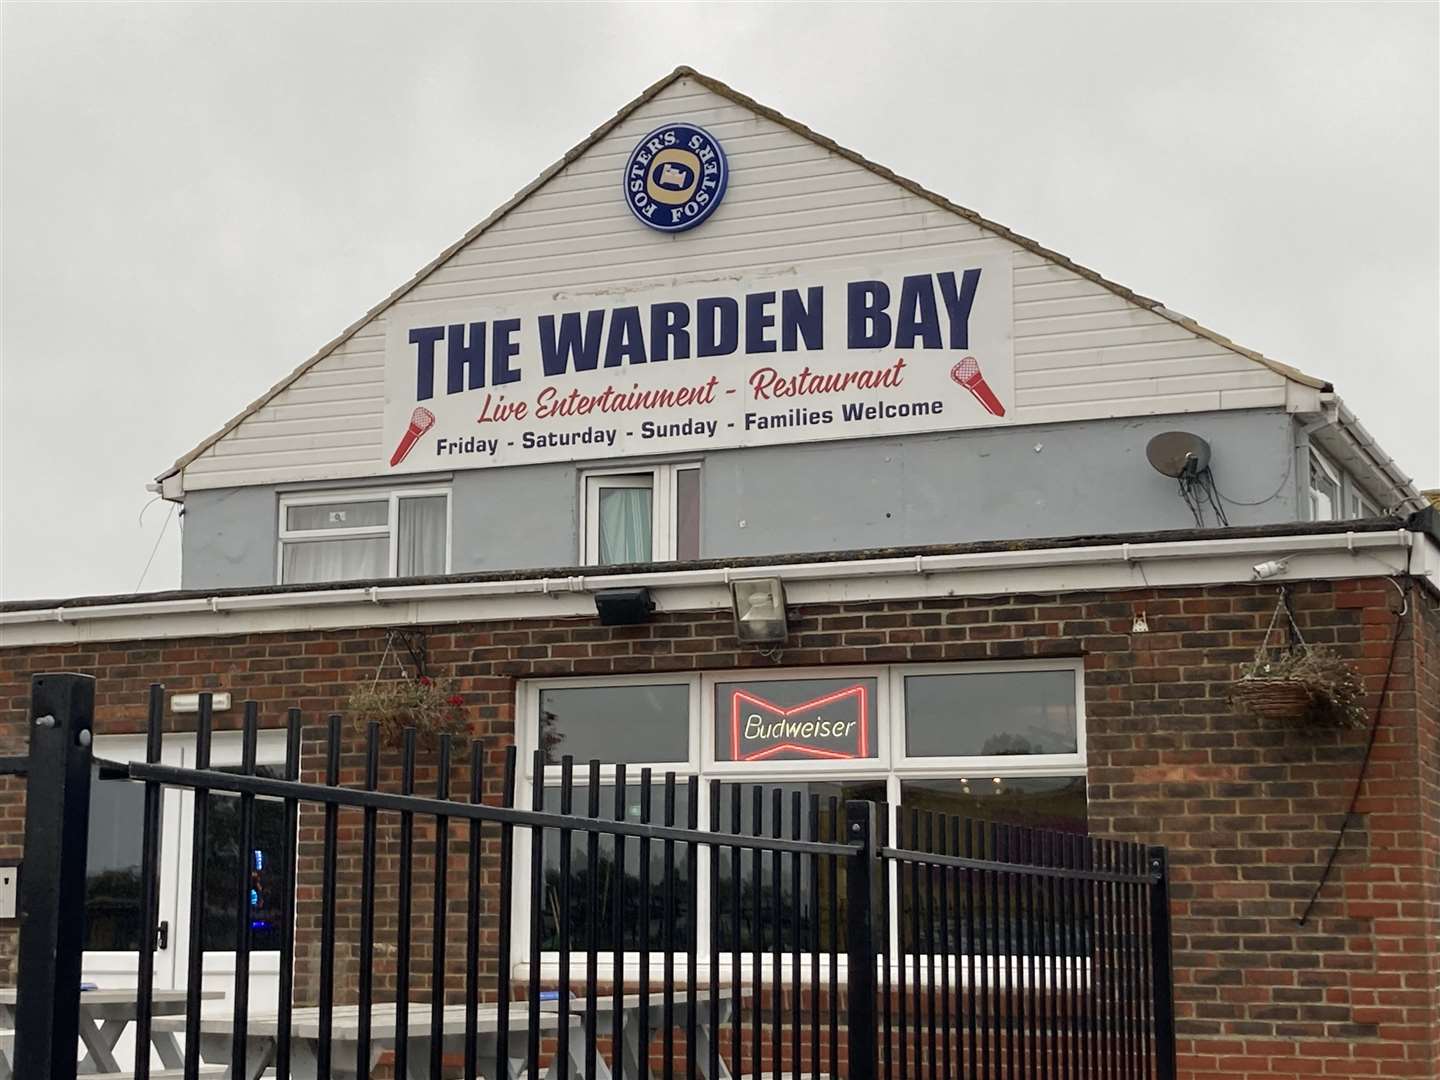 The Warden Bay pub in Sheppey..